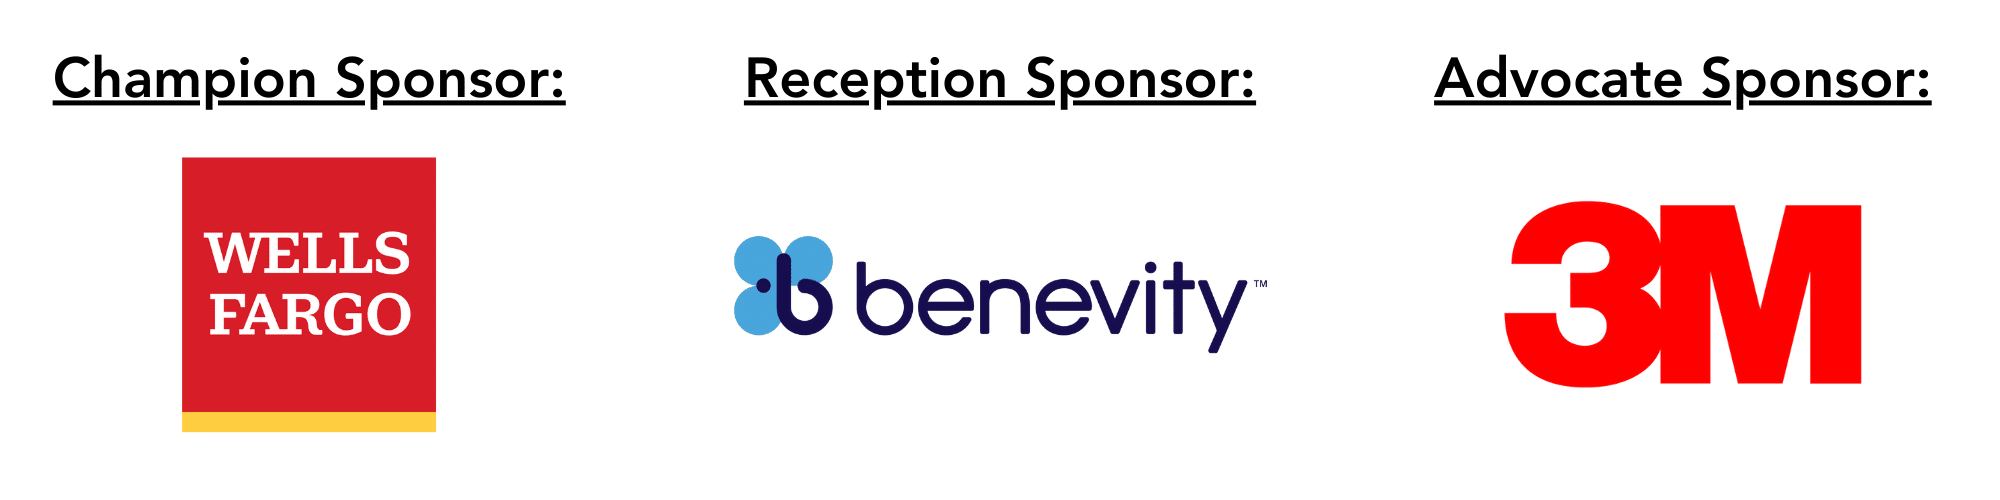 Image featuring Wells Fargo logo, Benevity logo, and 3M logo